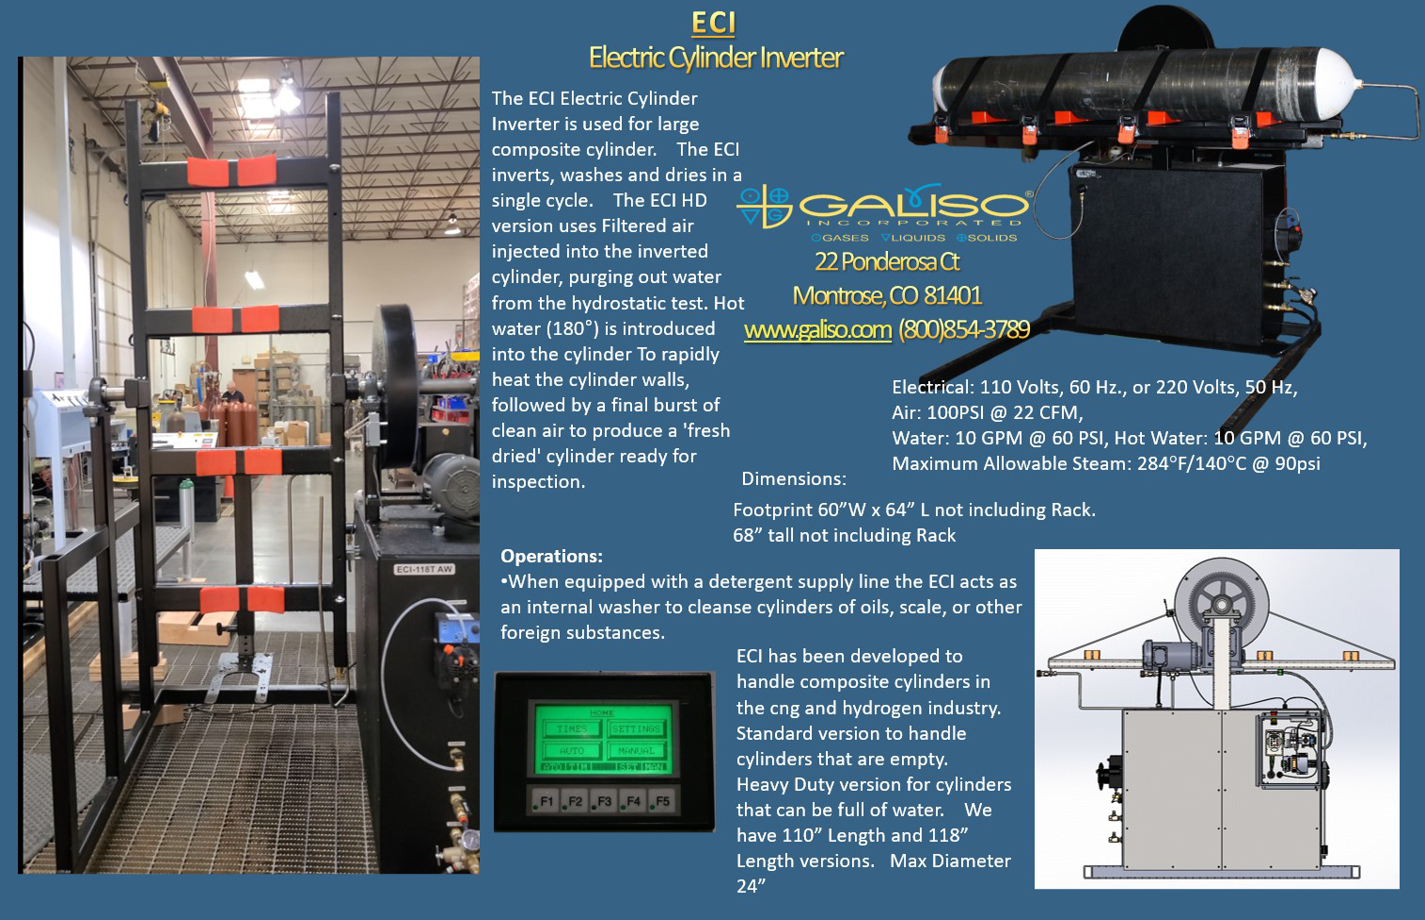 Galiso Electric Cylinder Inverter